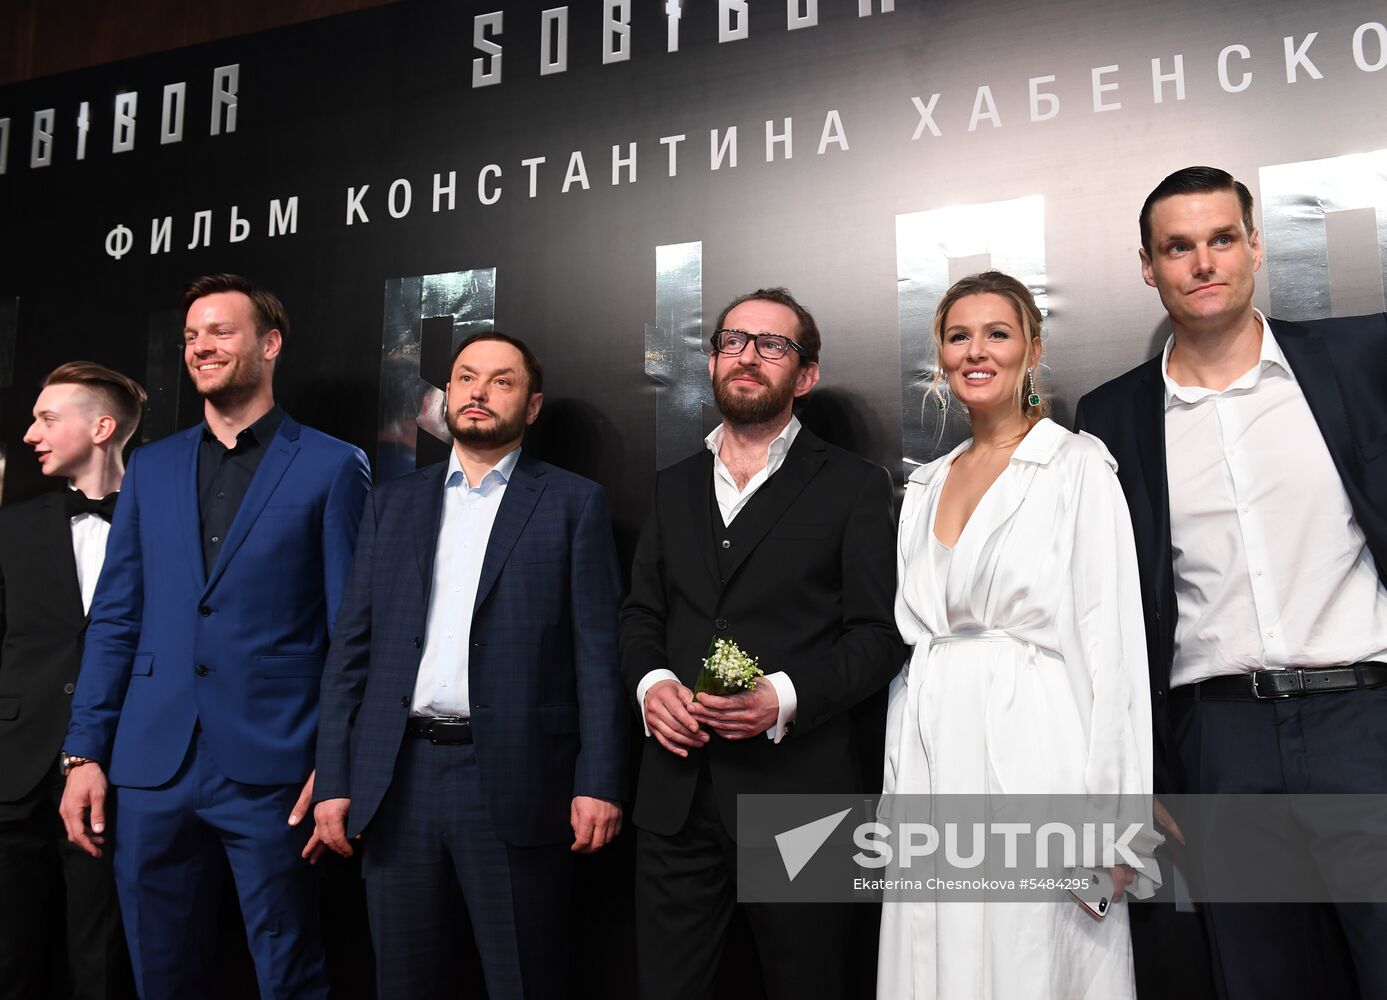 Moscow premiere of Konstantin Khabensky's Sobibor